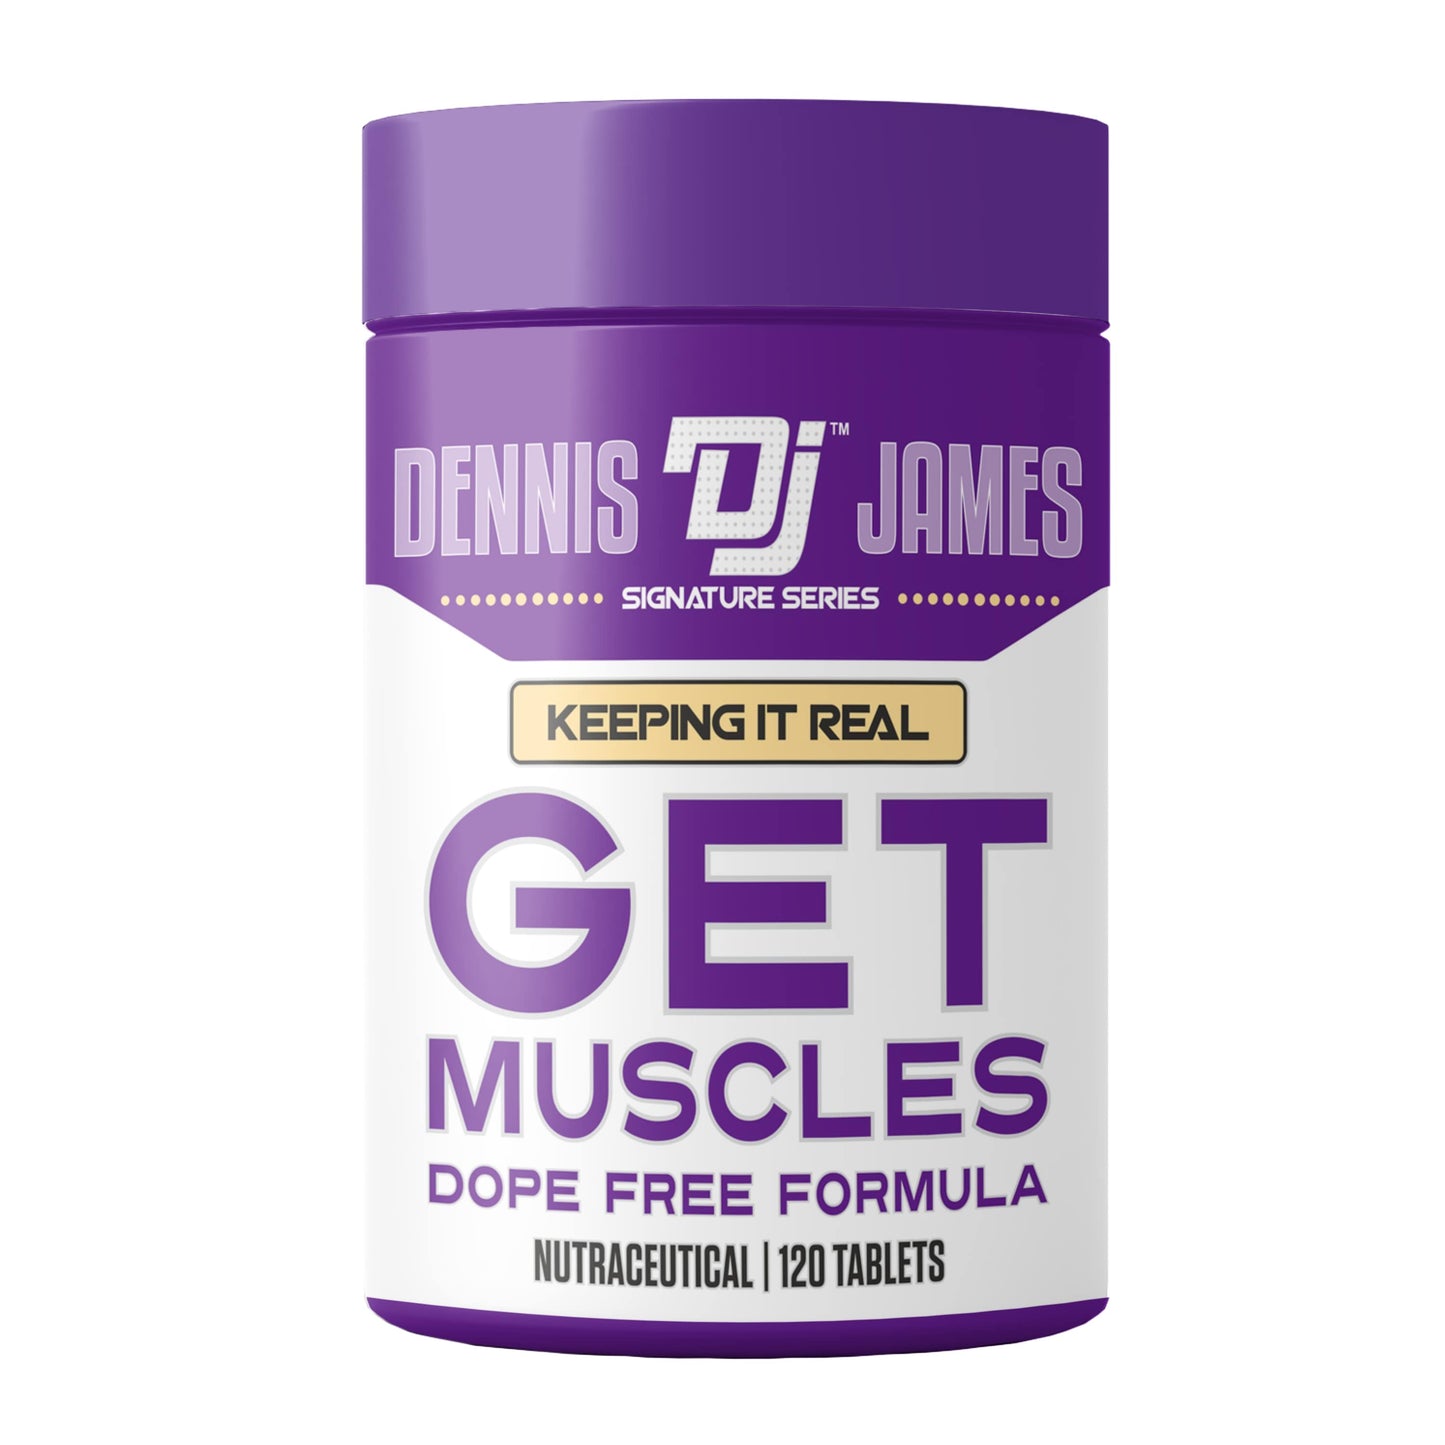 Dennis James Signature Series Get Muscles